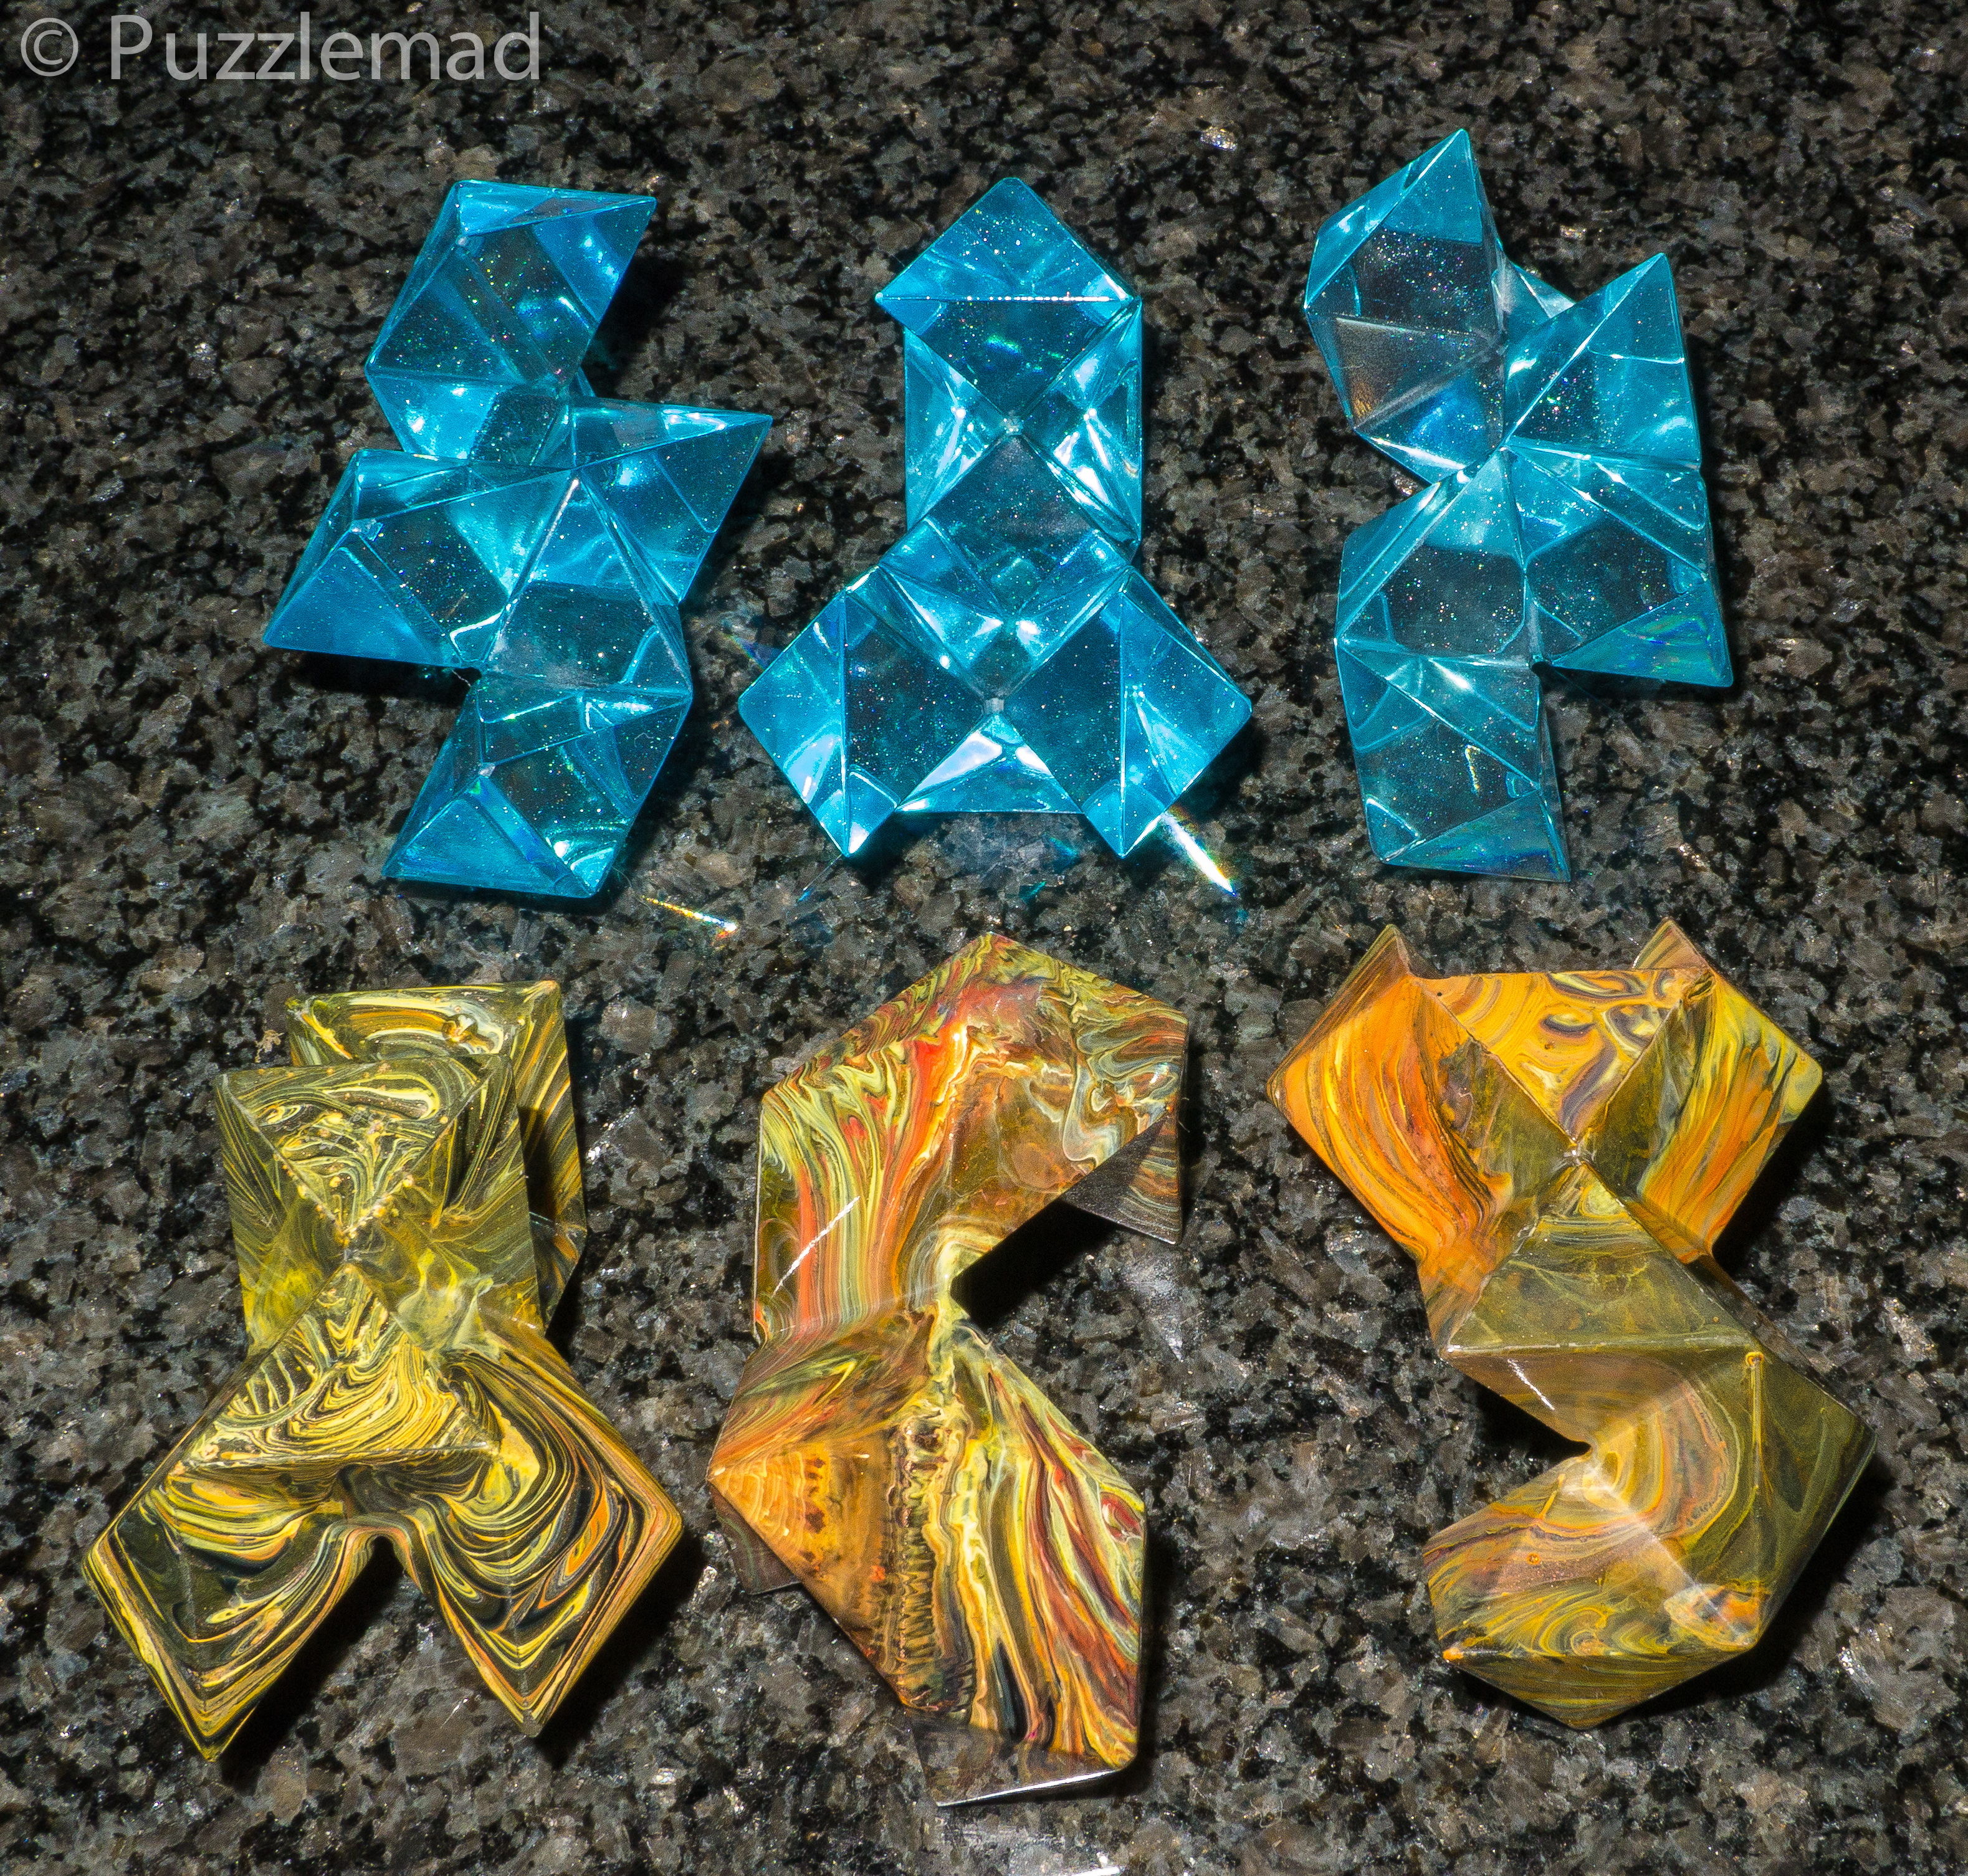 PuzzleMad: The Diamond 13 Puzzle